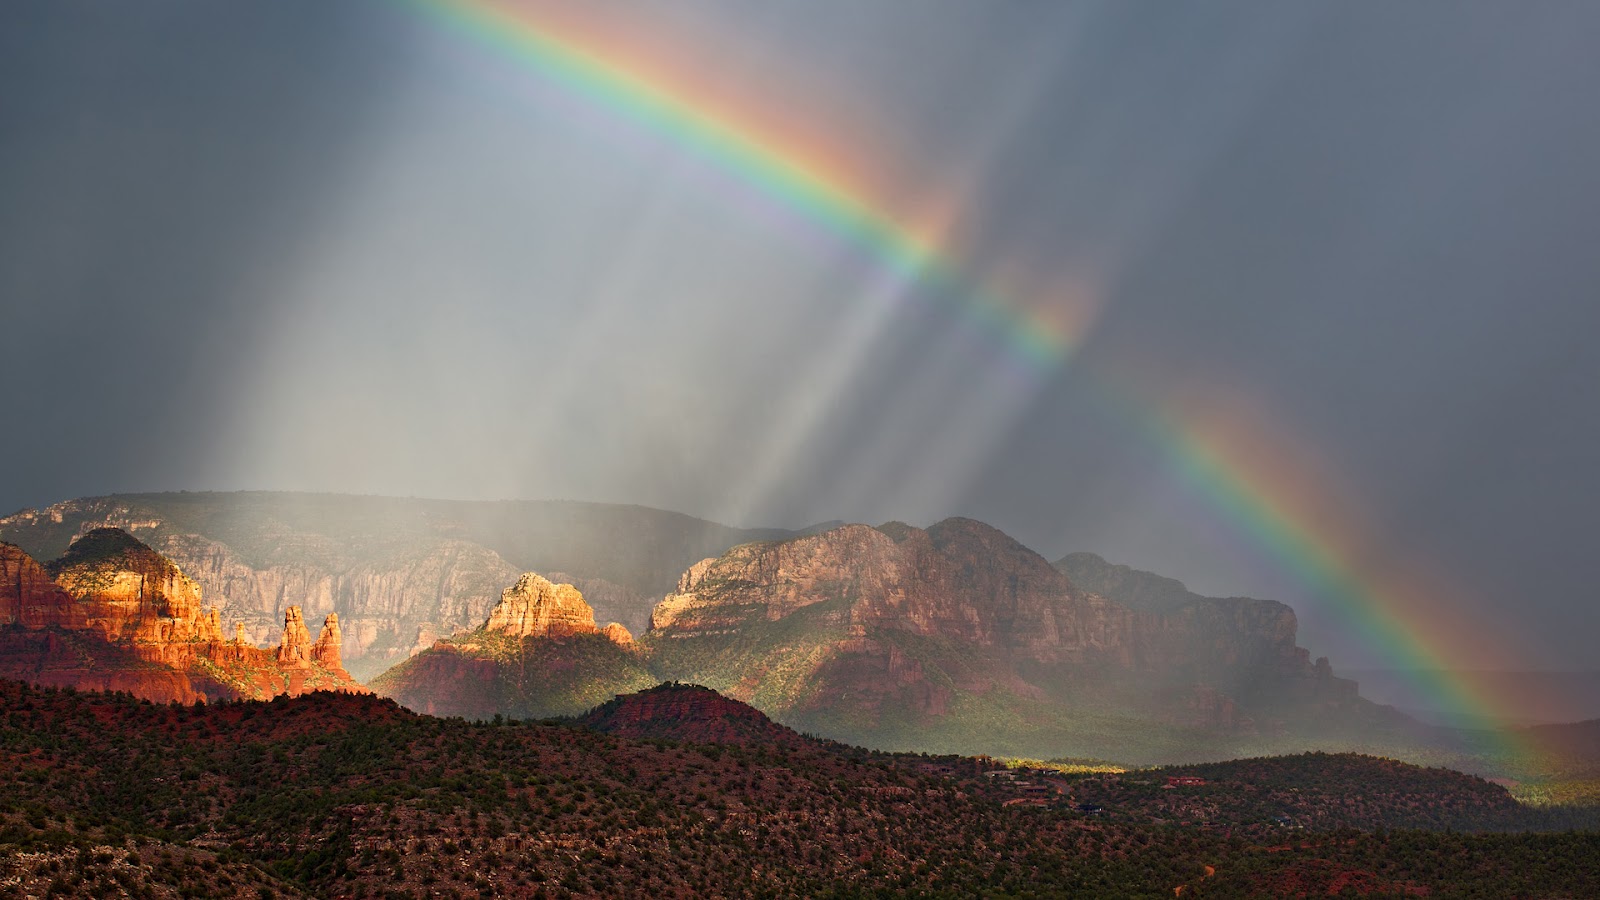 http://2.bp.blogspot.com/-6bEUJY5cn00/UA1Xabp3lTI/AAAAAAAAAUA/2bmsaRbCyQw/s1600/Rainbow,+Munds+Mountain+Wilderness,+Sedona,+Arizona.jpg